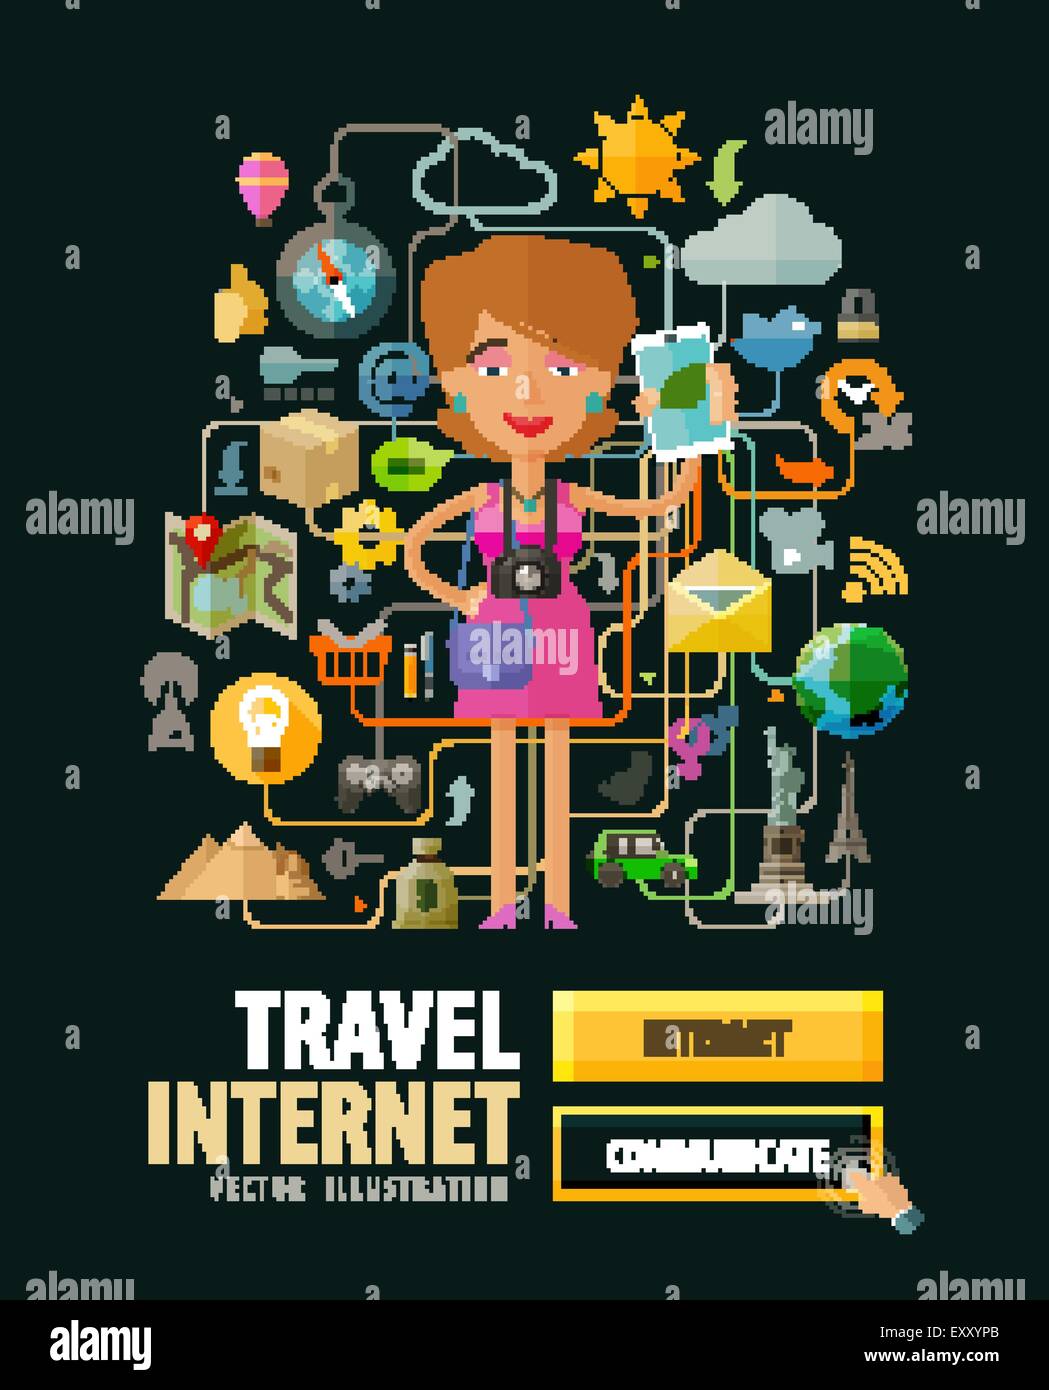 mobile Internet service vector logo design template. phone, travel or Internet, online icons Stock Vector